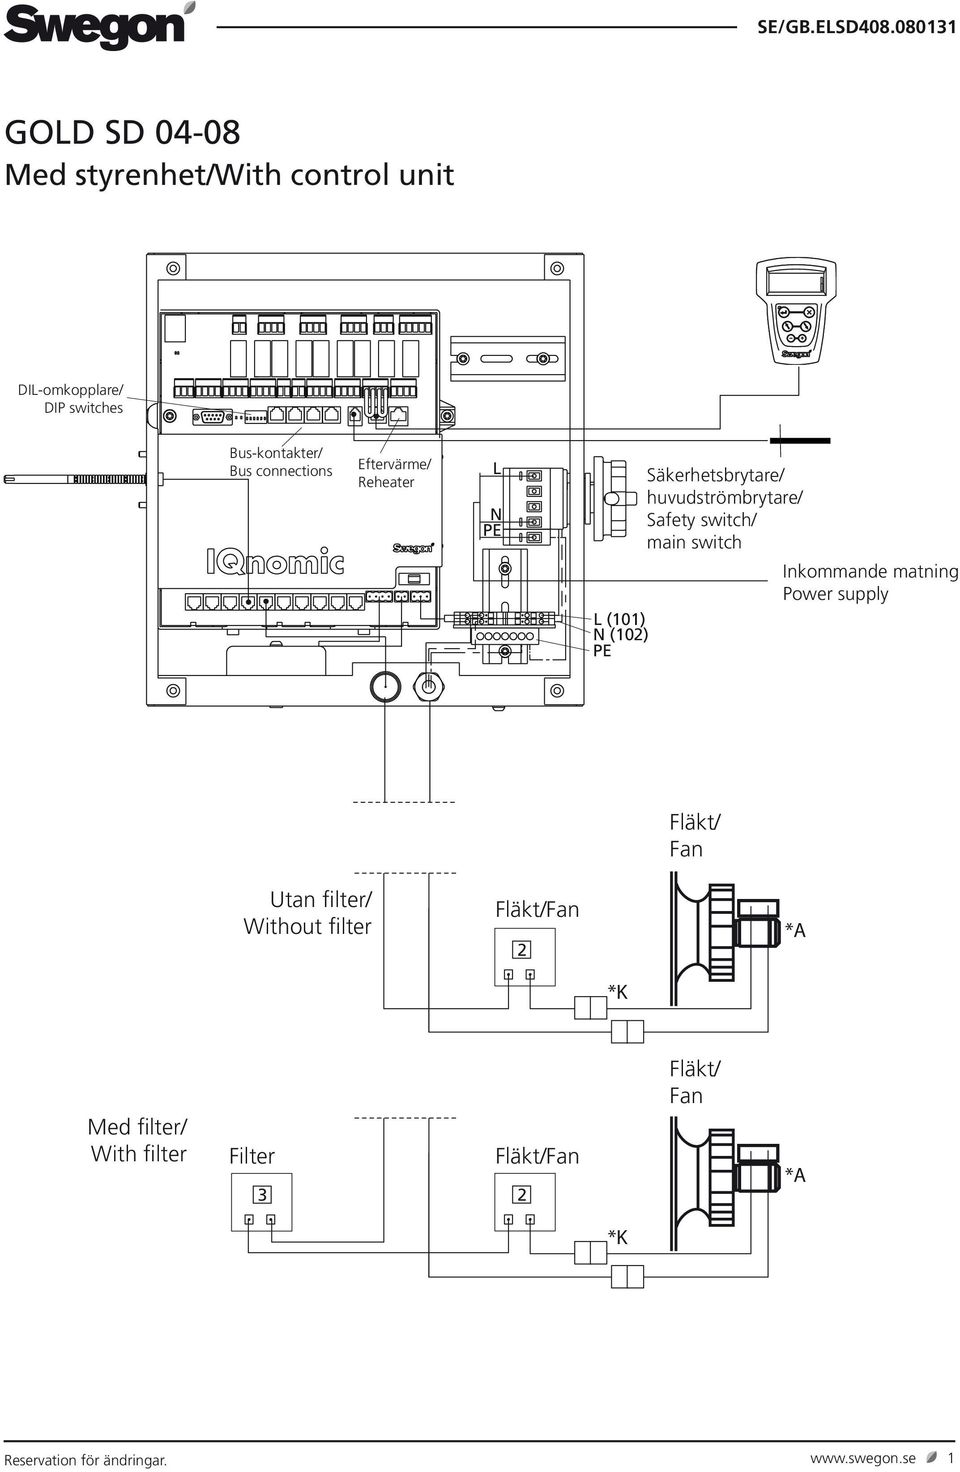 Safety switch/ main switch Inkommande matning Power supply Fläkt/ Fan Utan filter/ Without